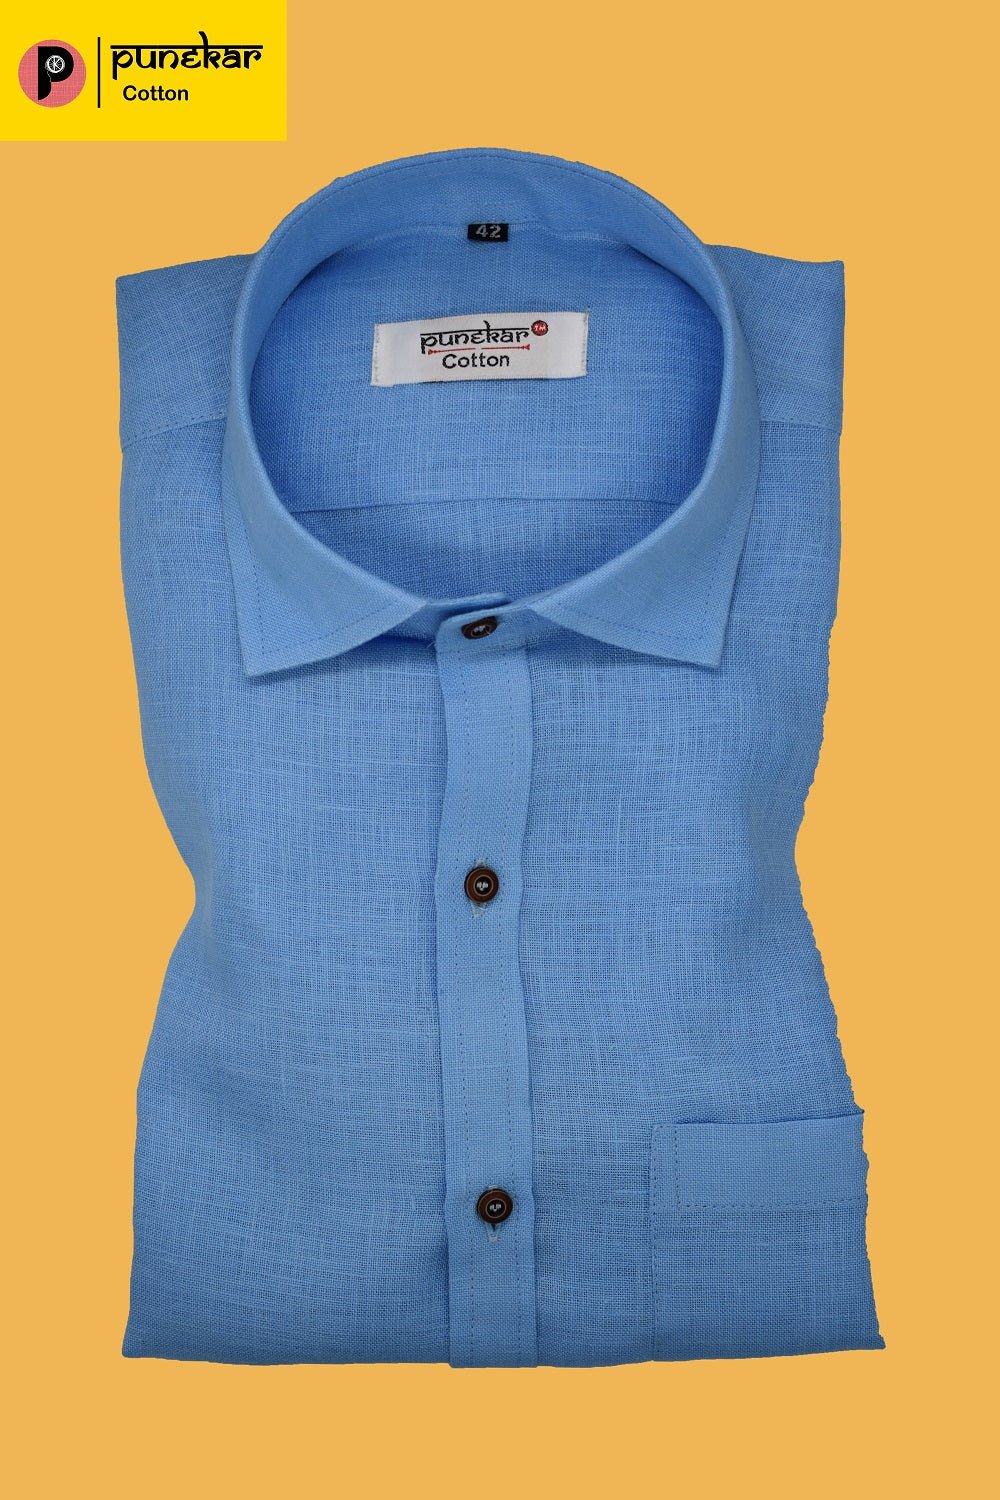 Punekar Cotton Sky Blue Color Formal Linen shirts for Men&